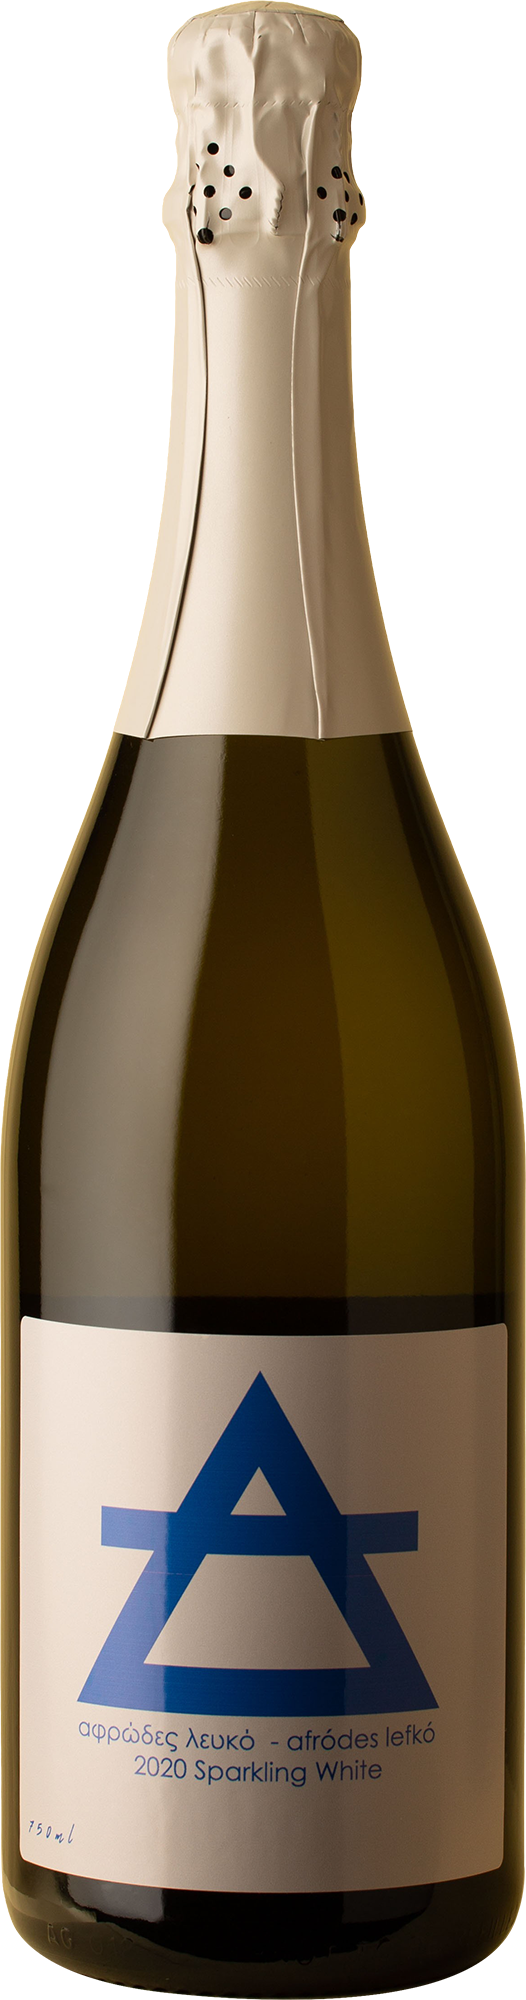 Chalari - Sparkling White 2020 Sparkling Wine